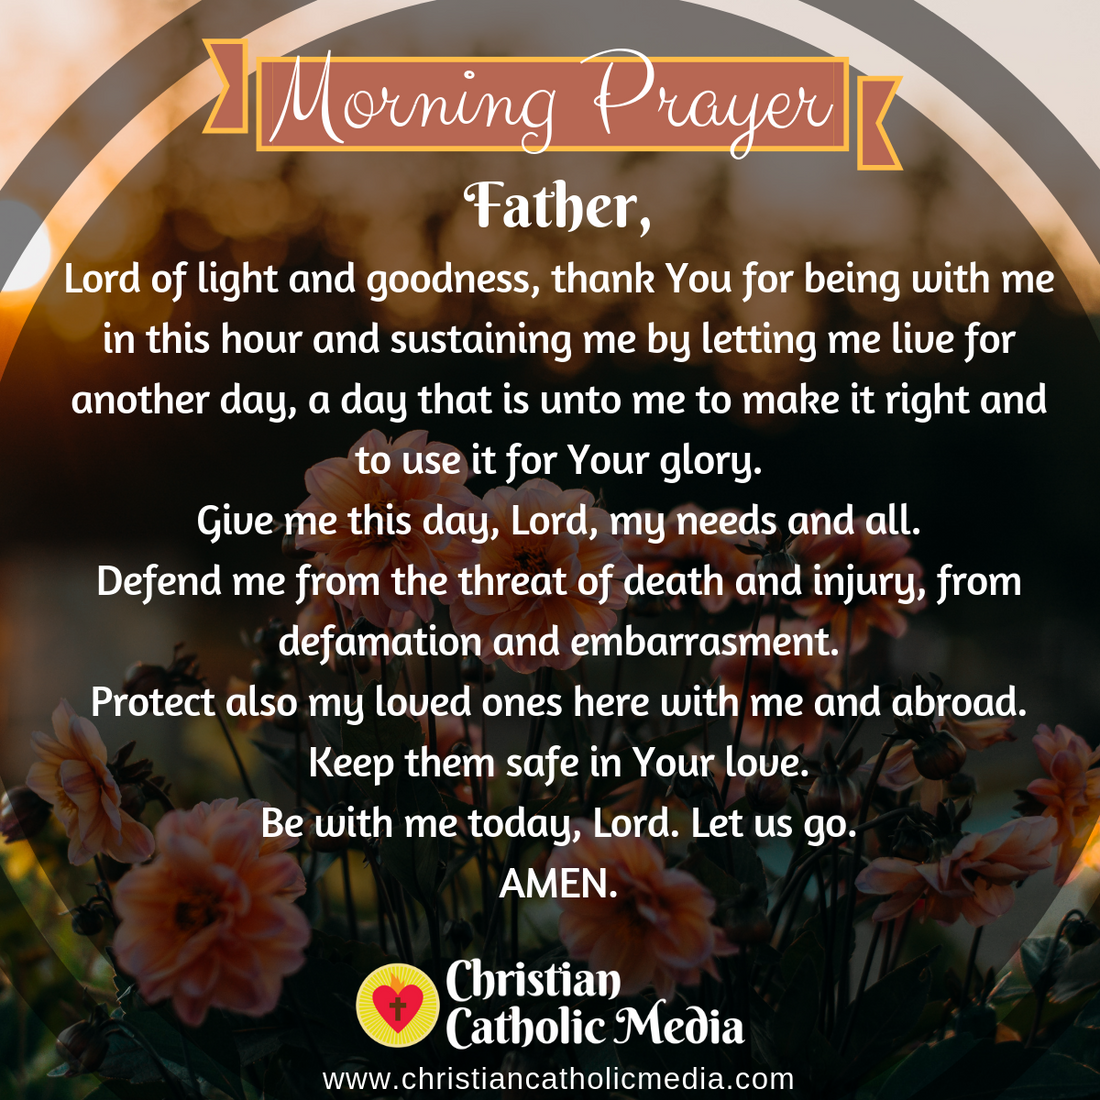 Morning Prayer Catholic Monday 12-9-2019